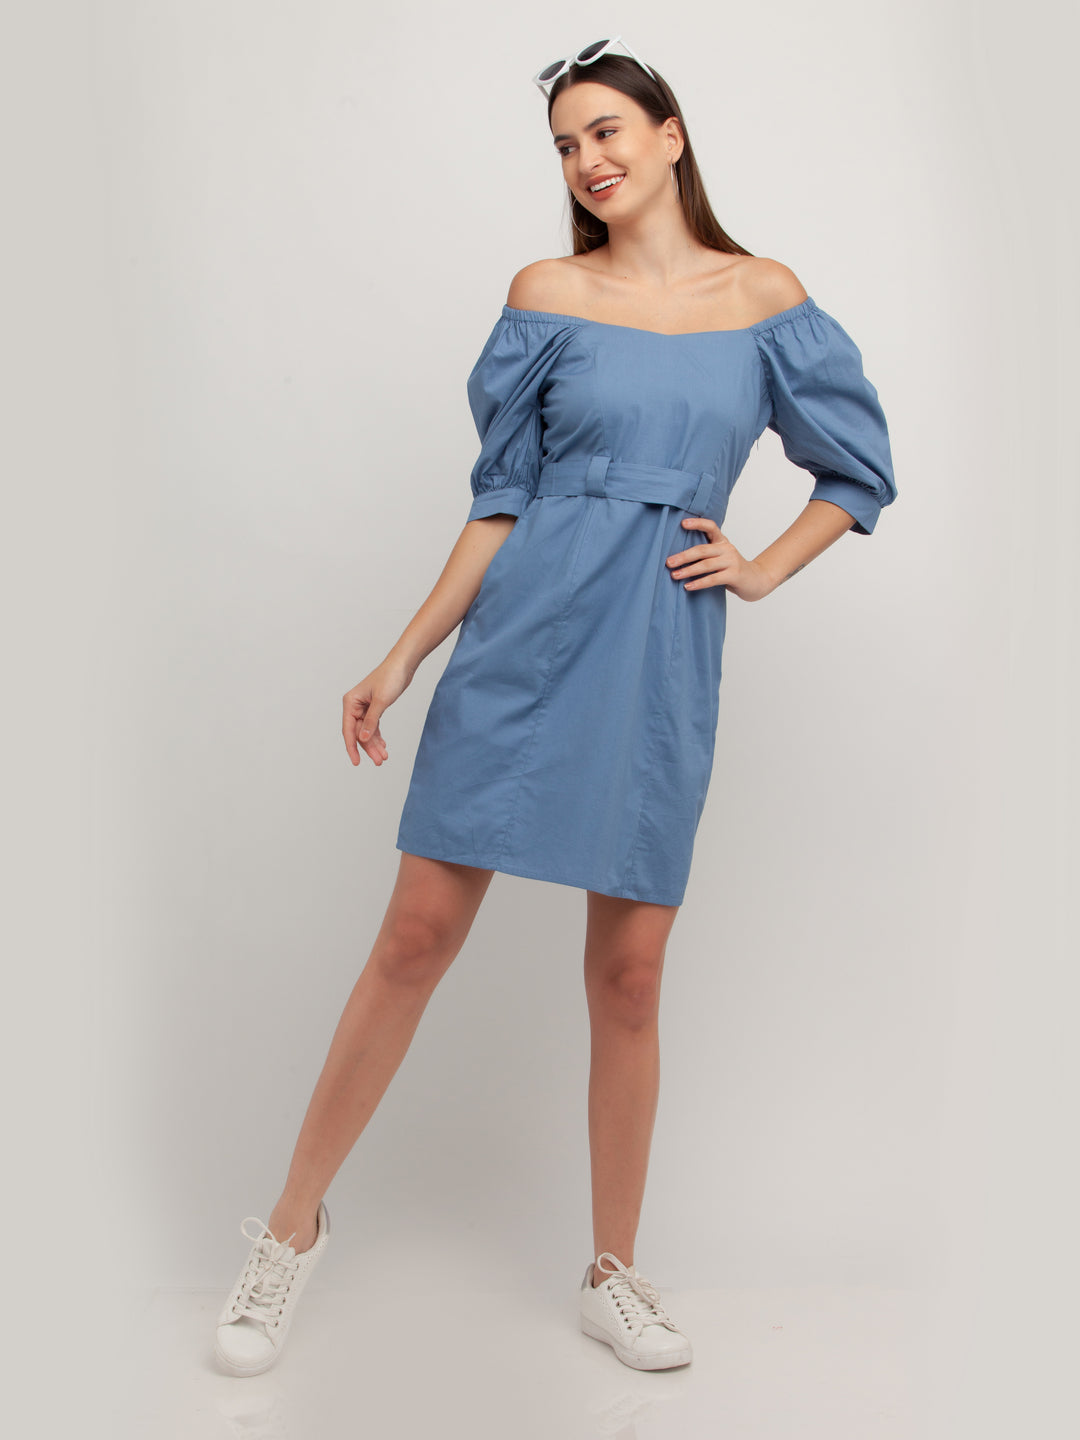 Blue Solid Short Dress For Women